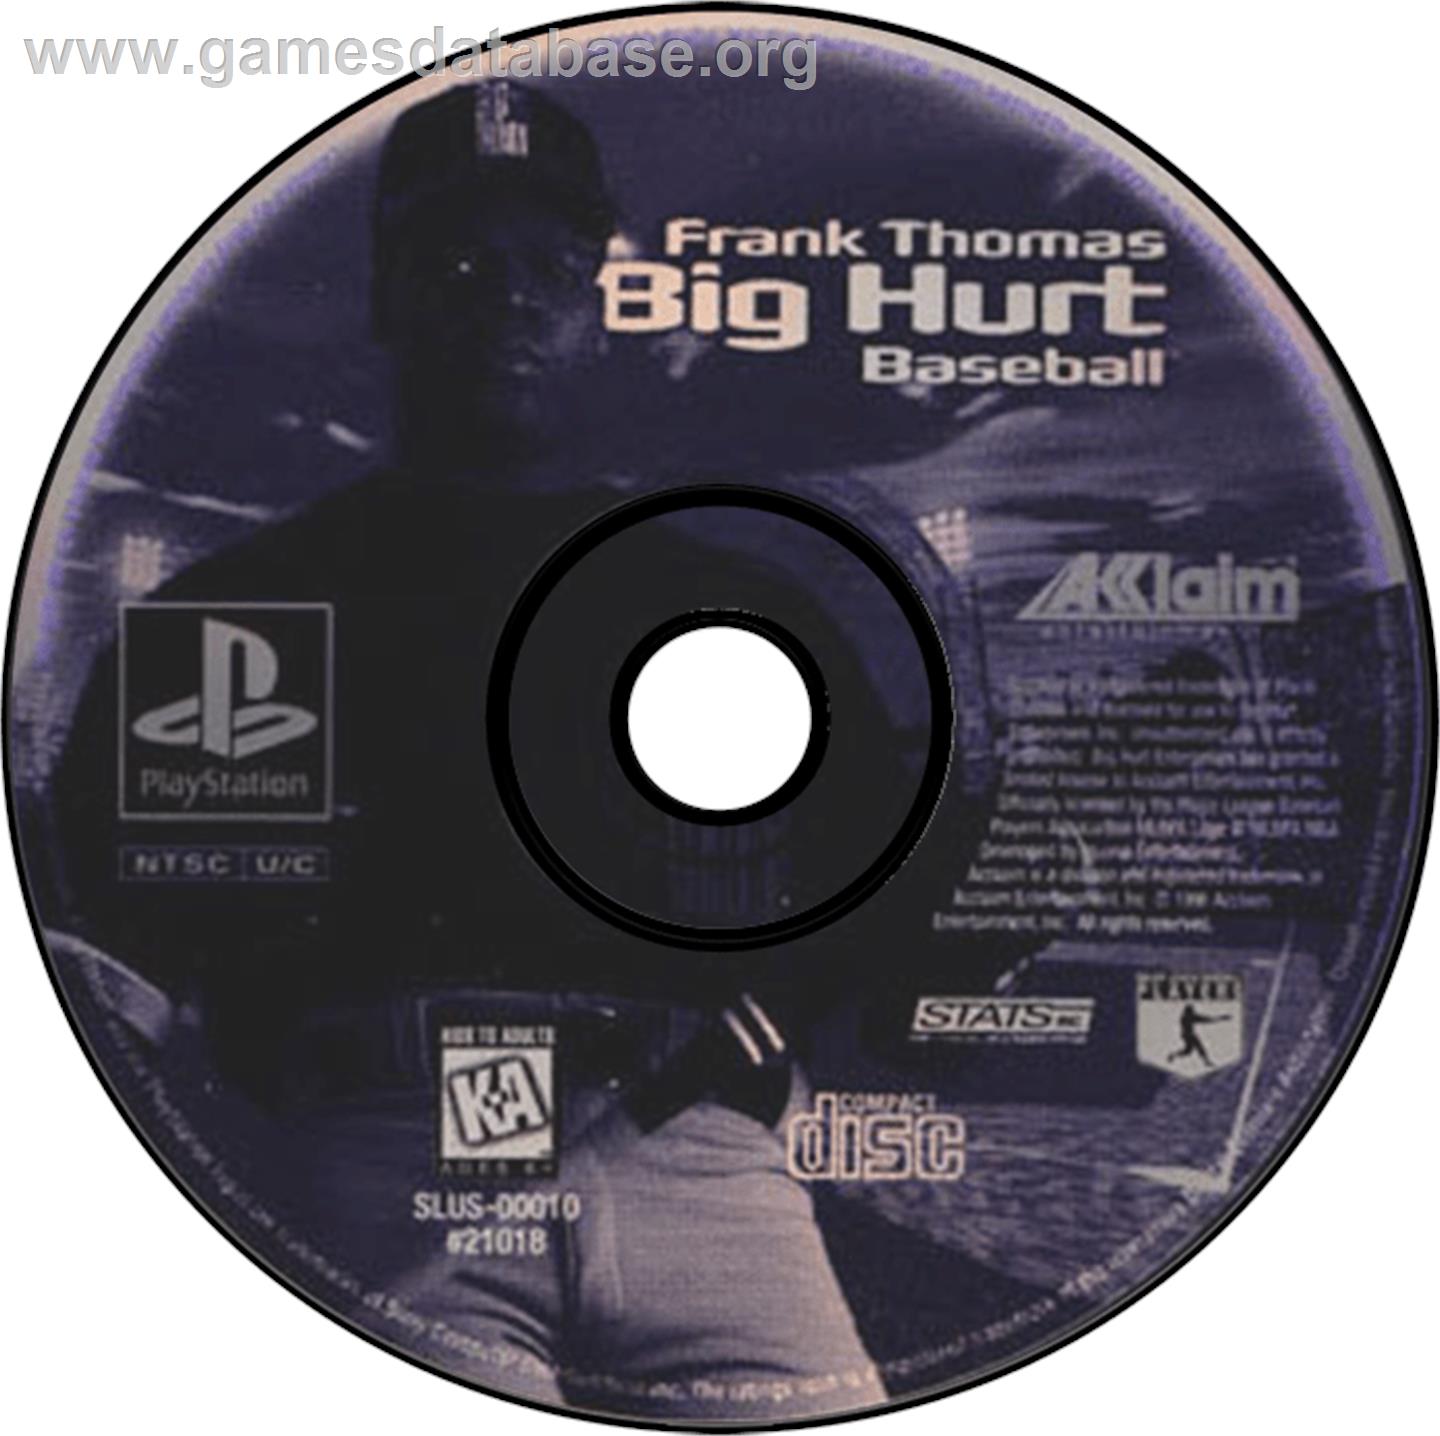 Frank Thomas Big Hurt Baseball - Sony Playstation - Artwork - Disc